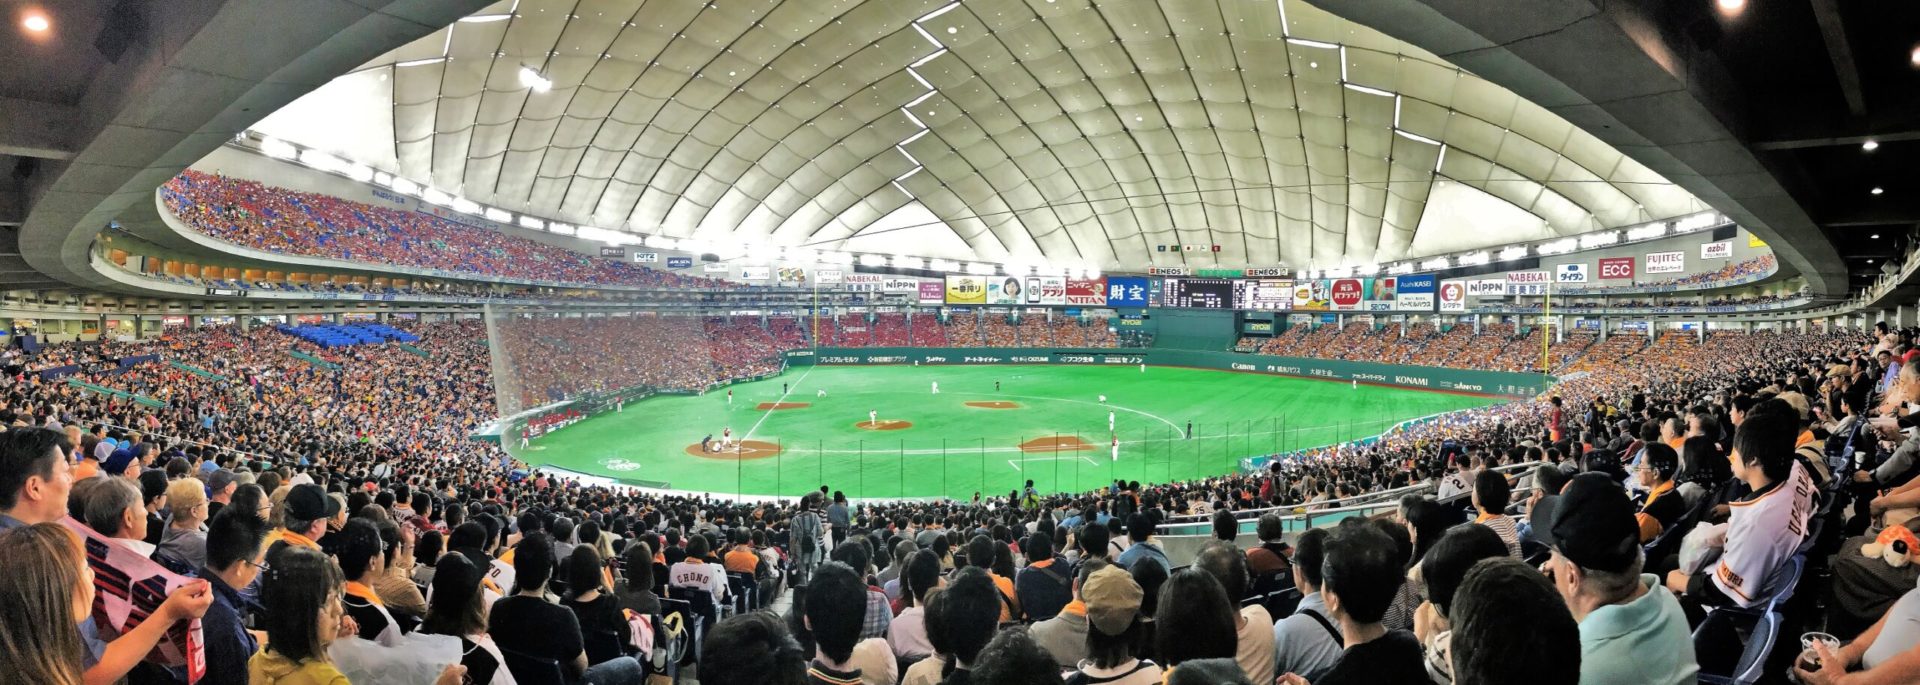 Coming with Giants Baseball Game at Tokyo Dome Japan 5